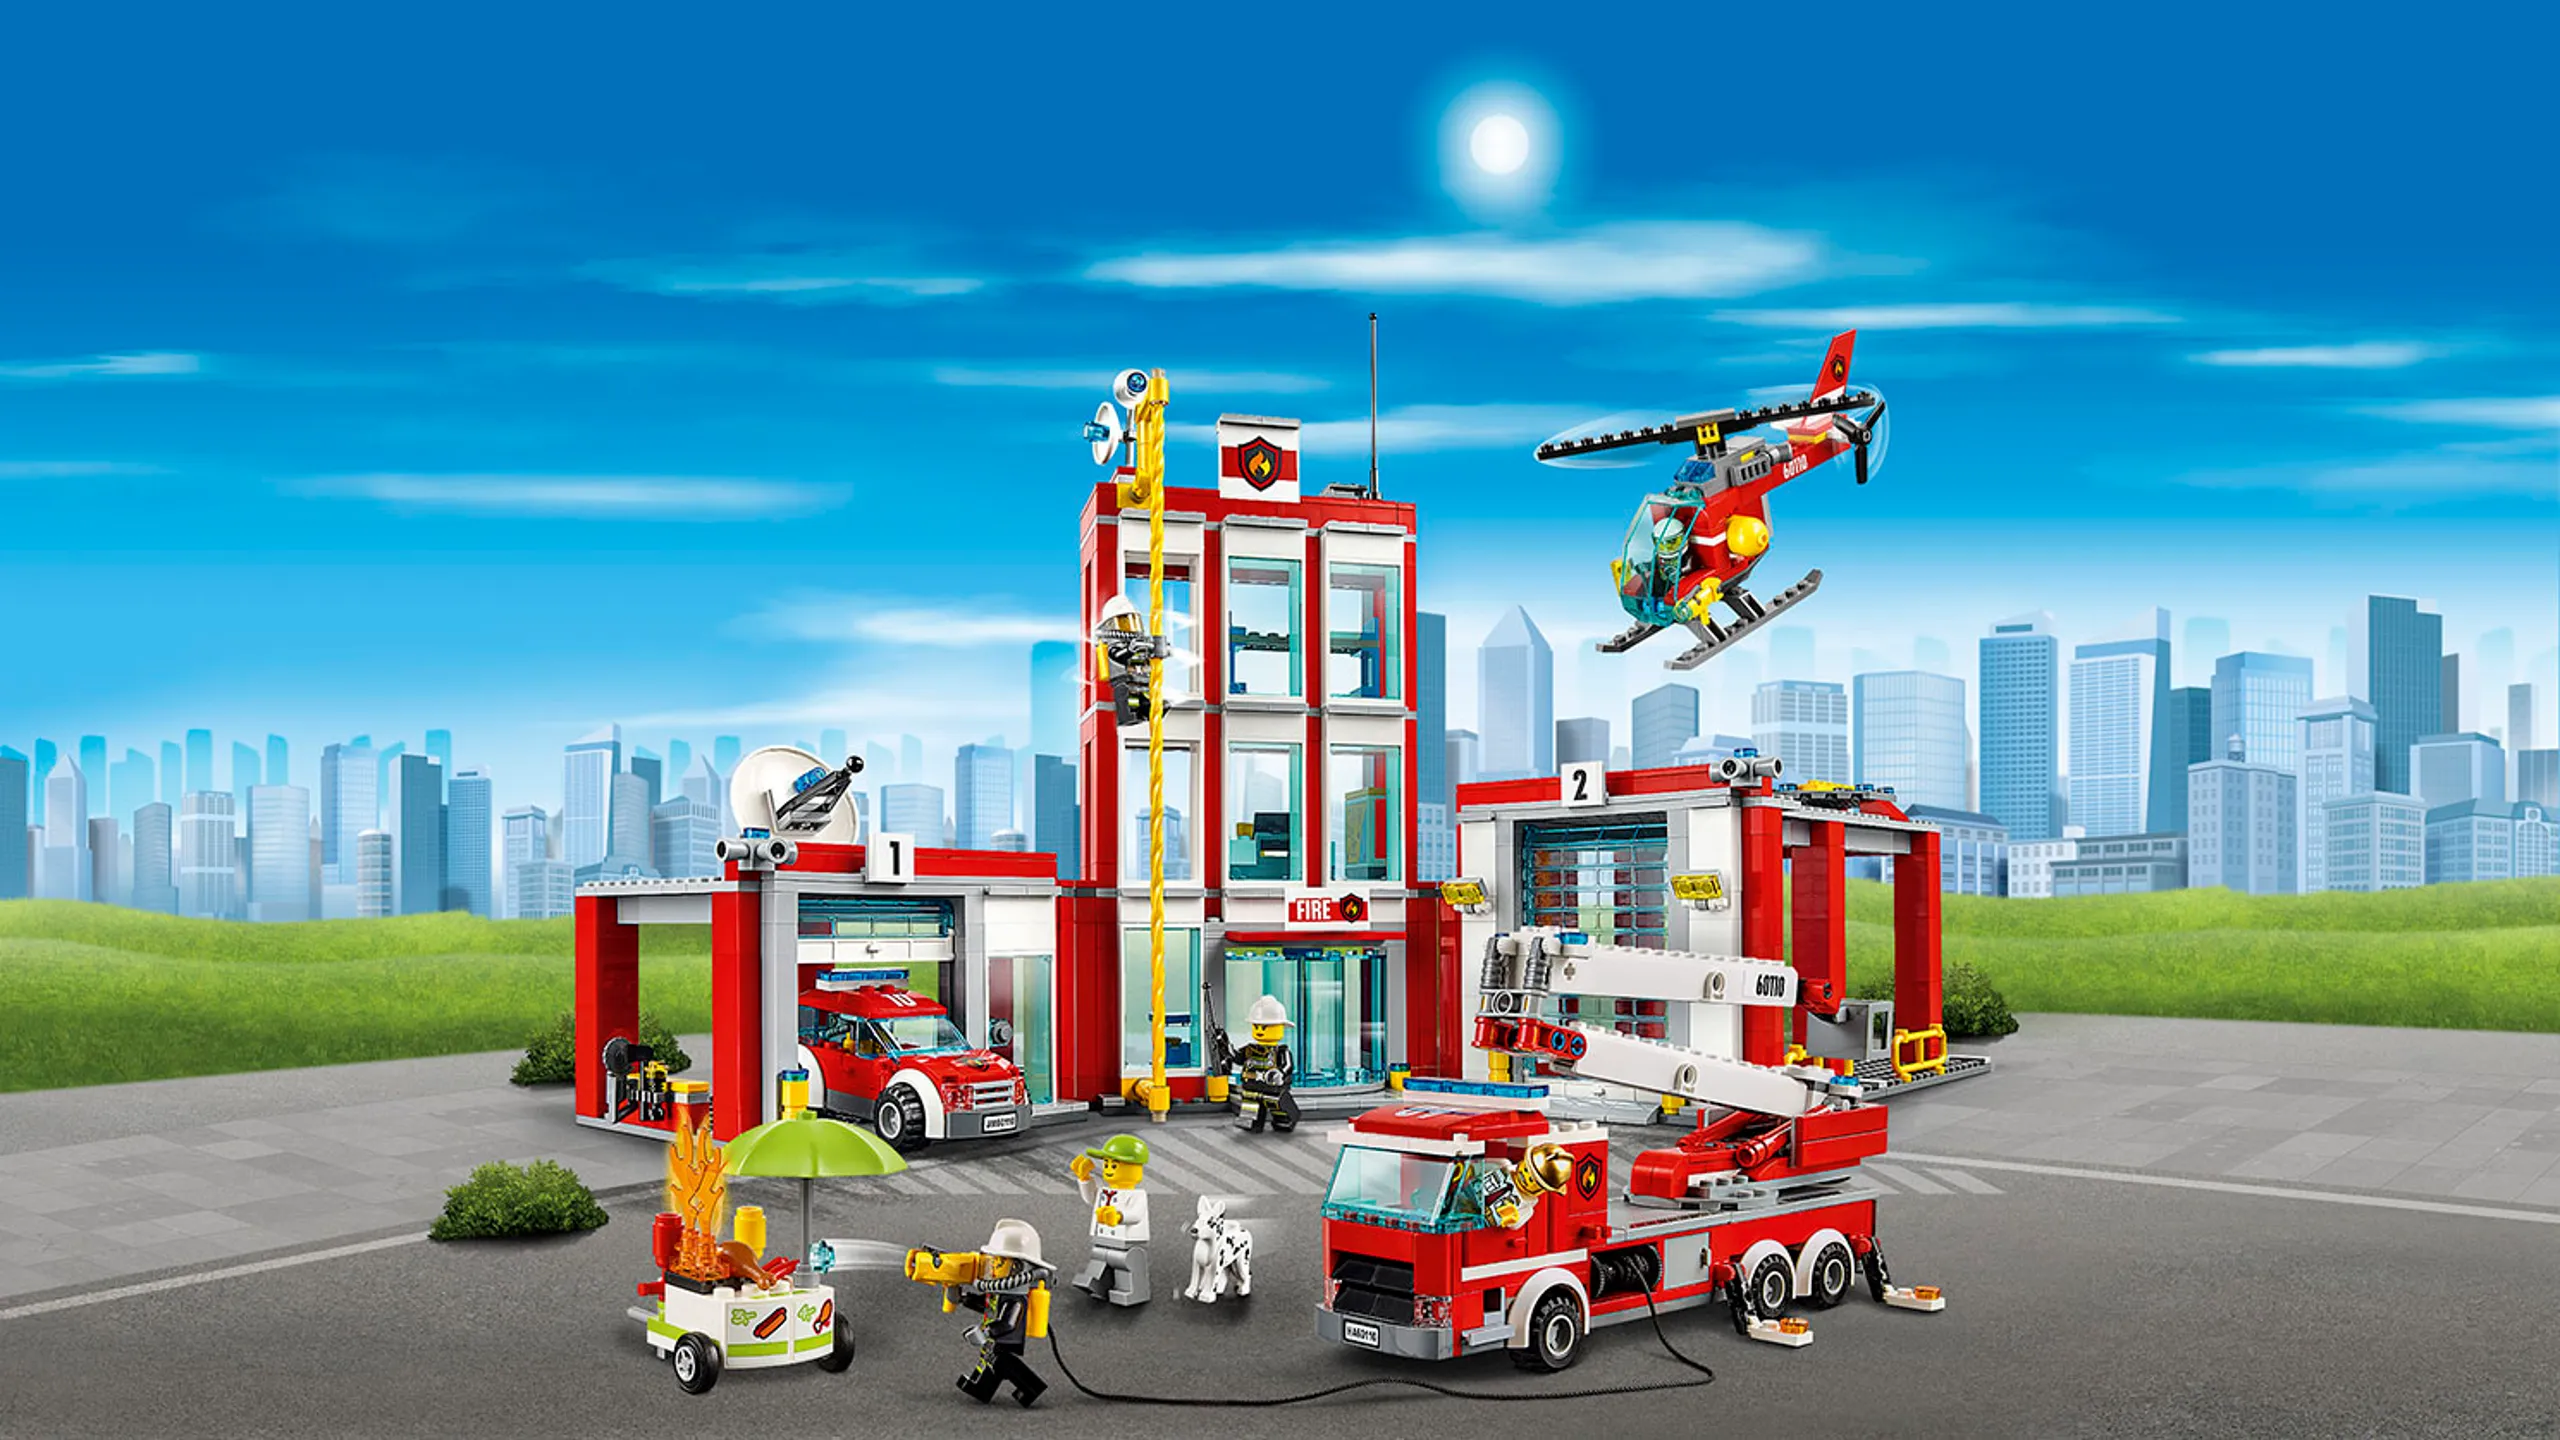 LEGO City: estación de bomberos con vehículos y minifiguras de bomberos – Estación de bomberos (60110)